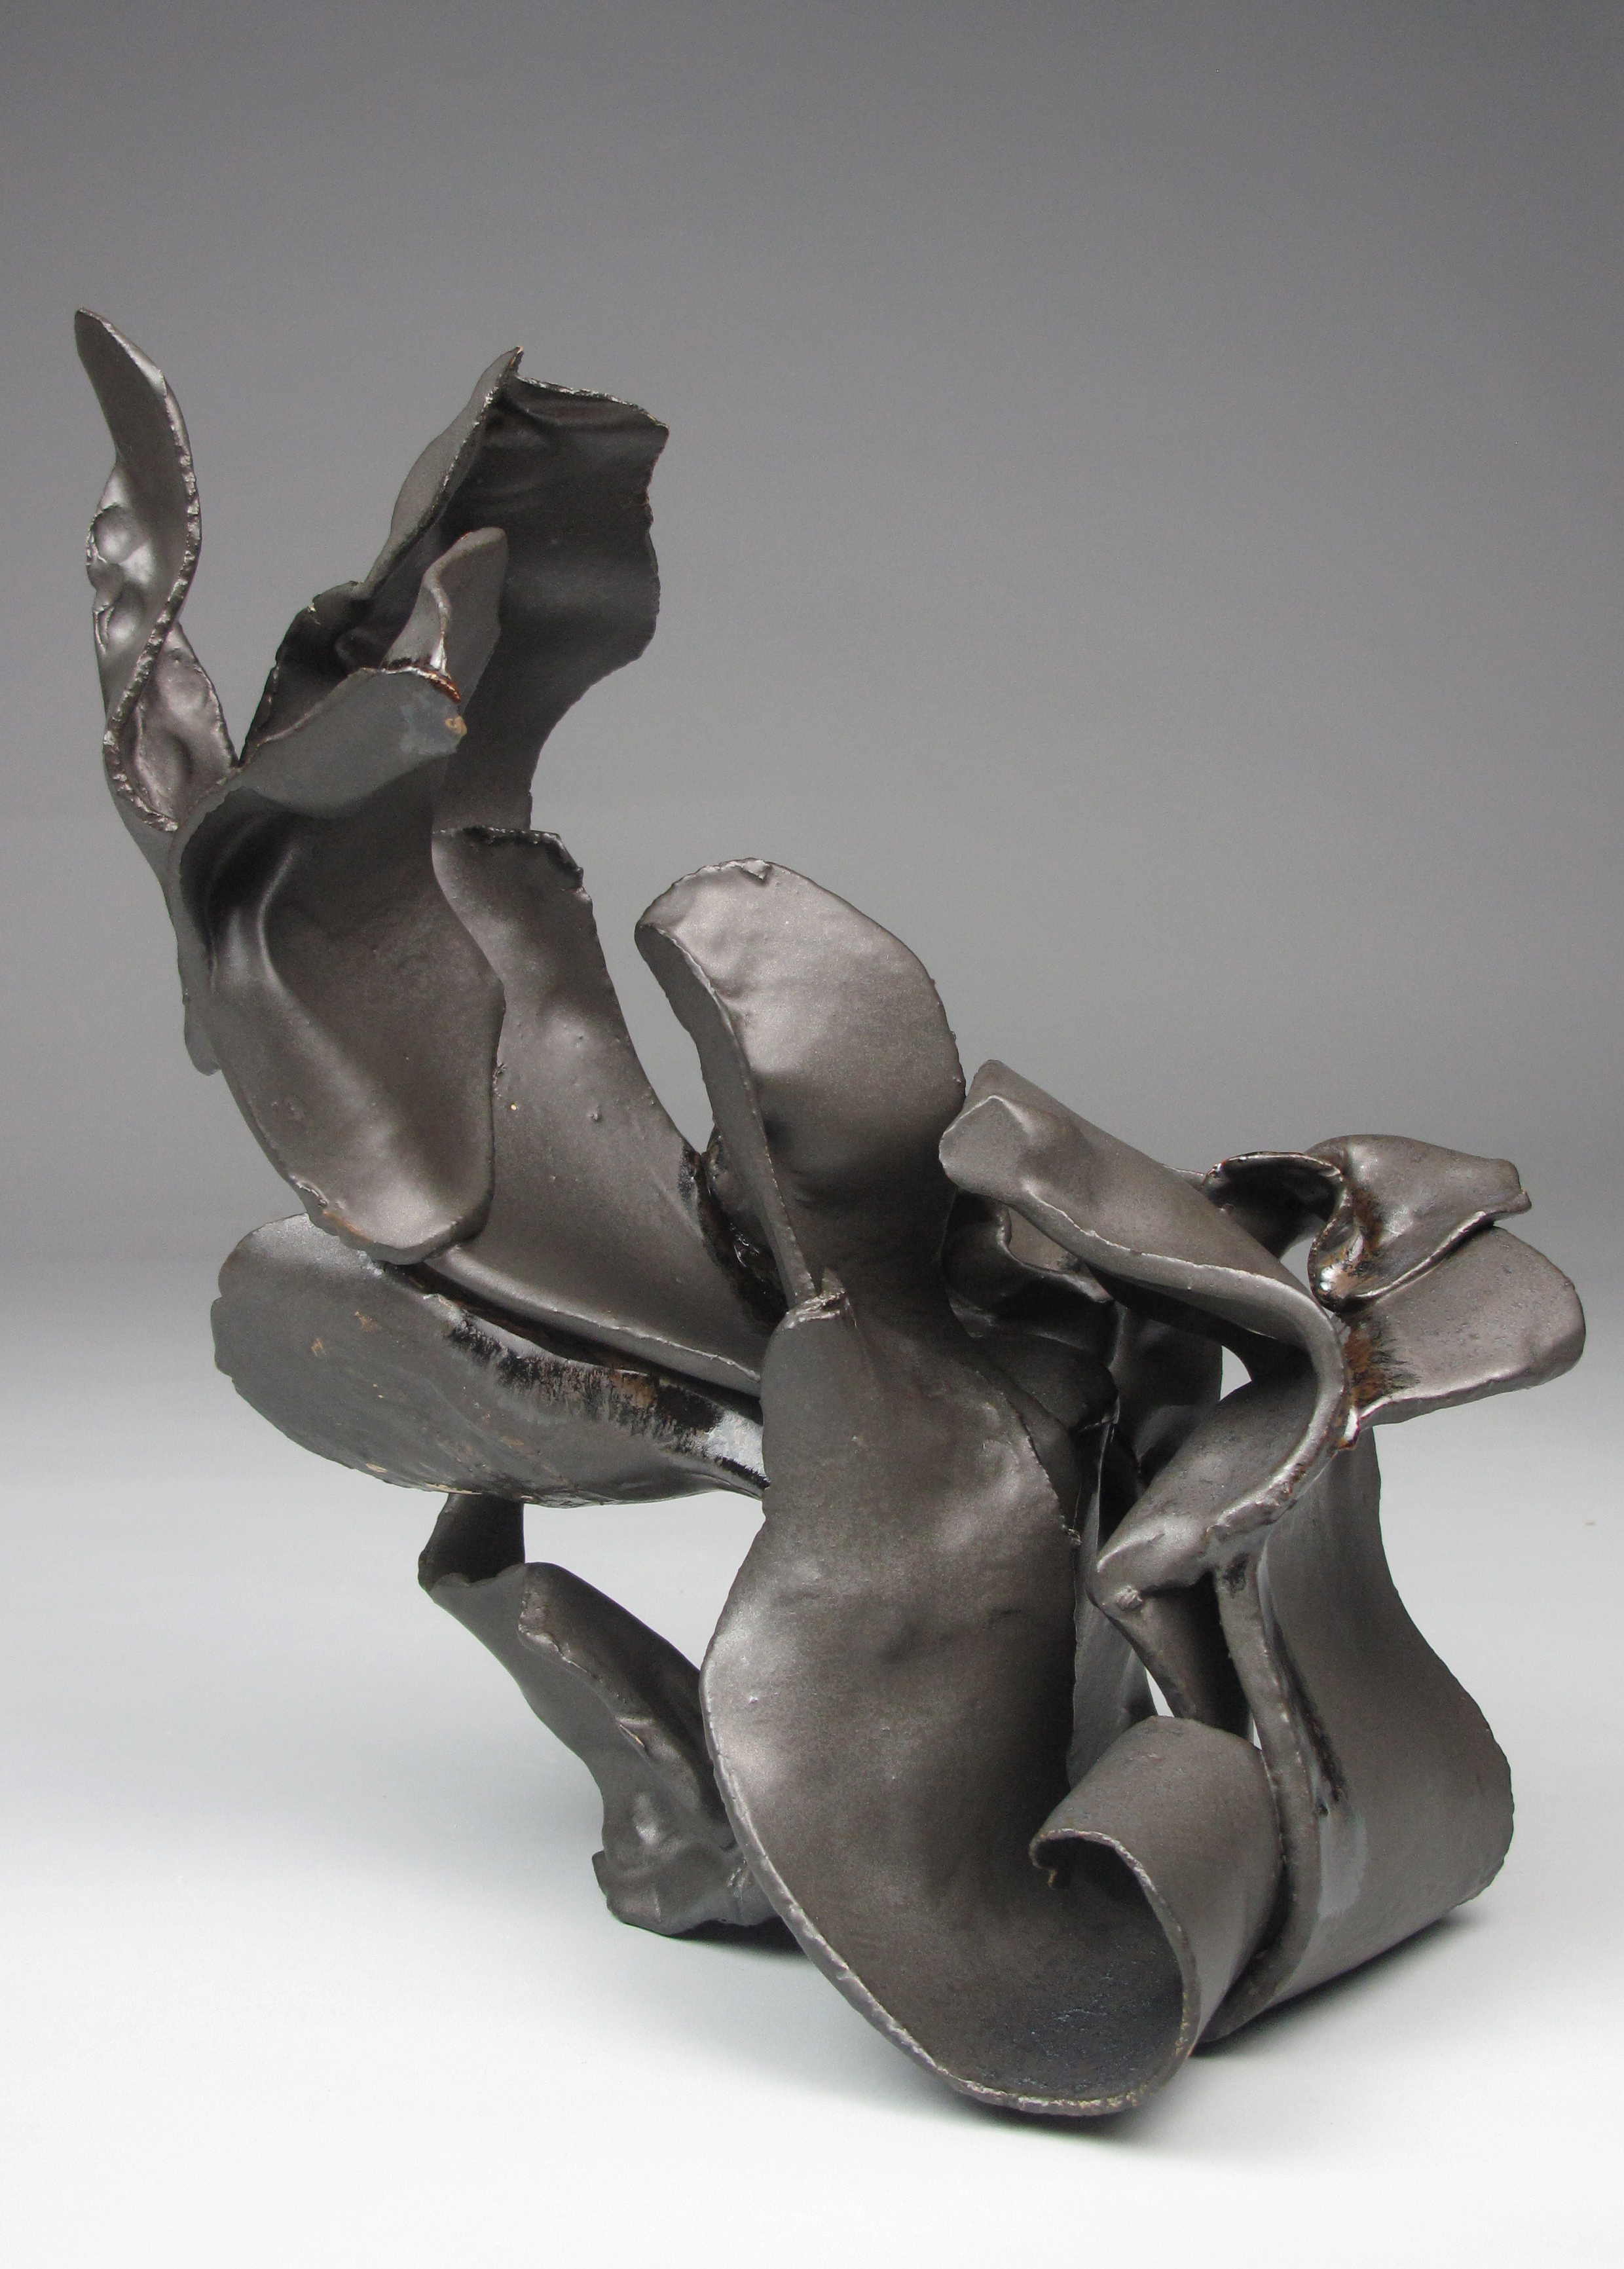  Sara Fine-Wilson, “ Tuck”   Ceramic, 14 x 12 x 10 inches 